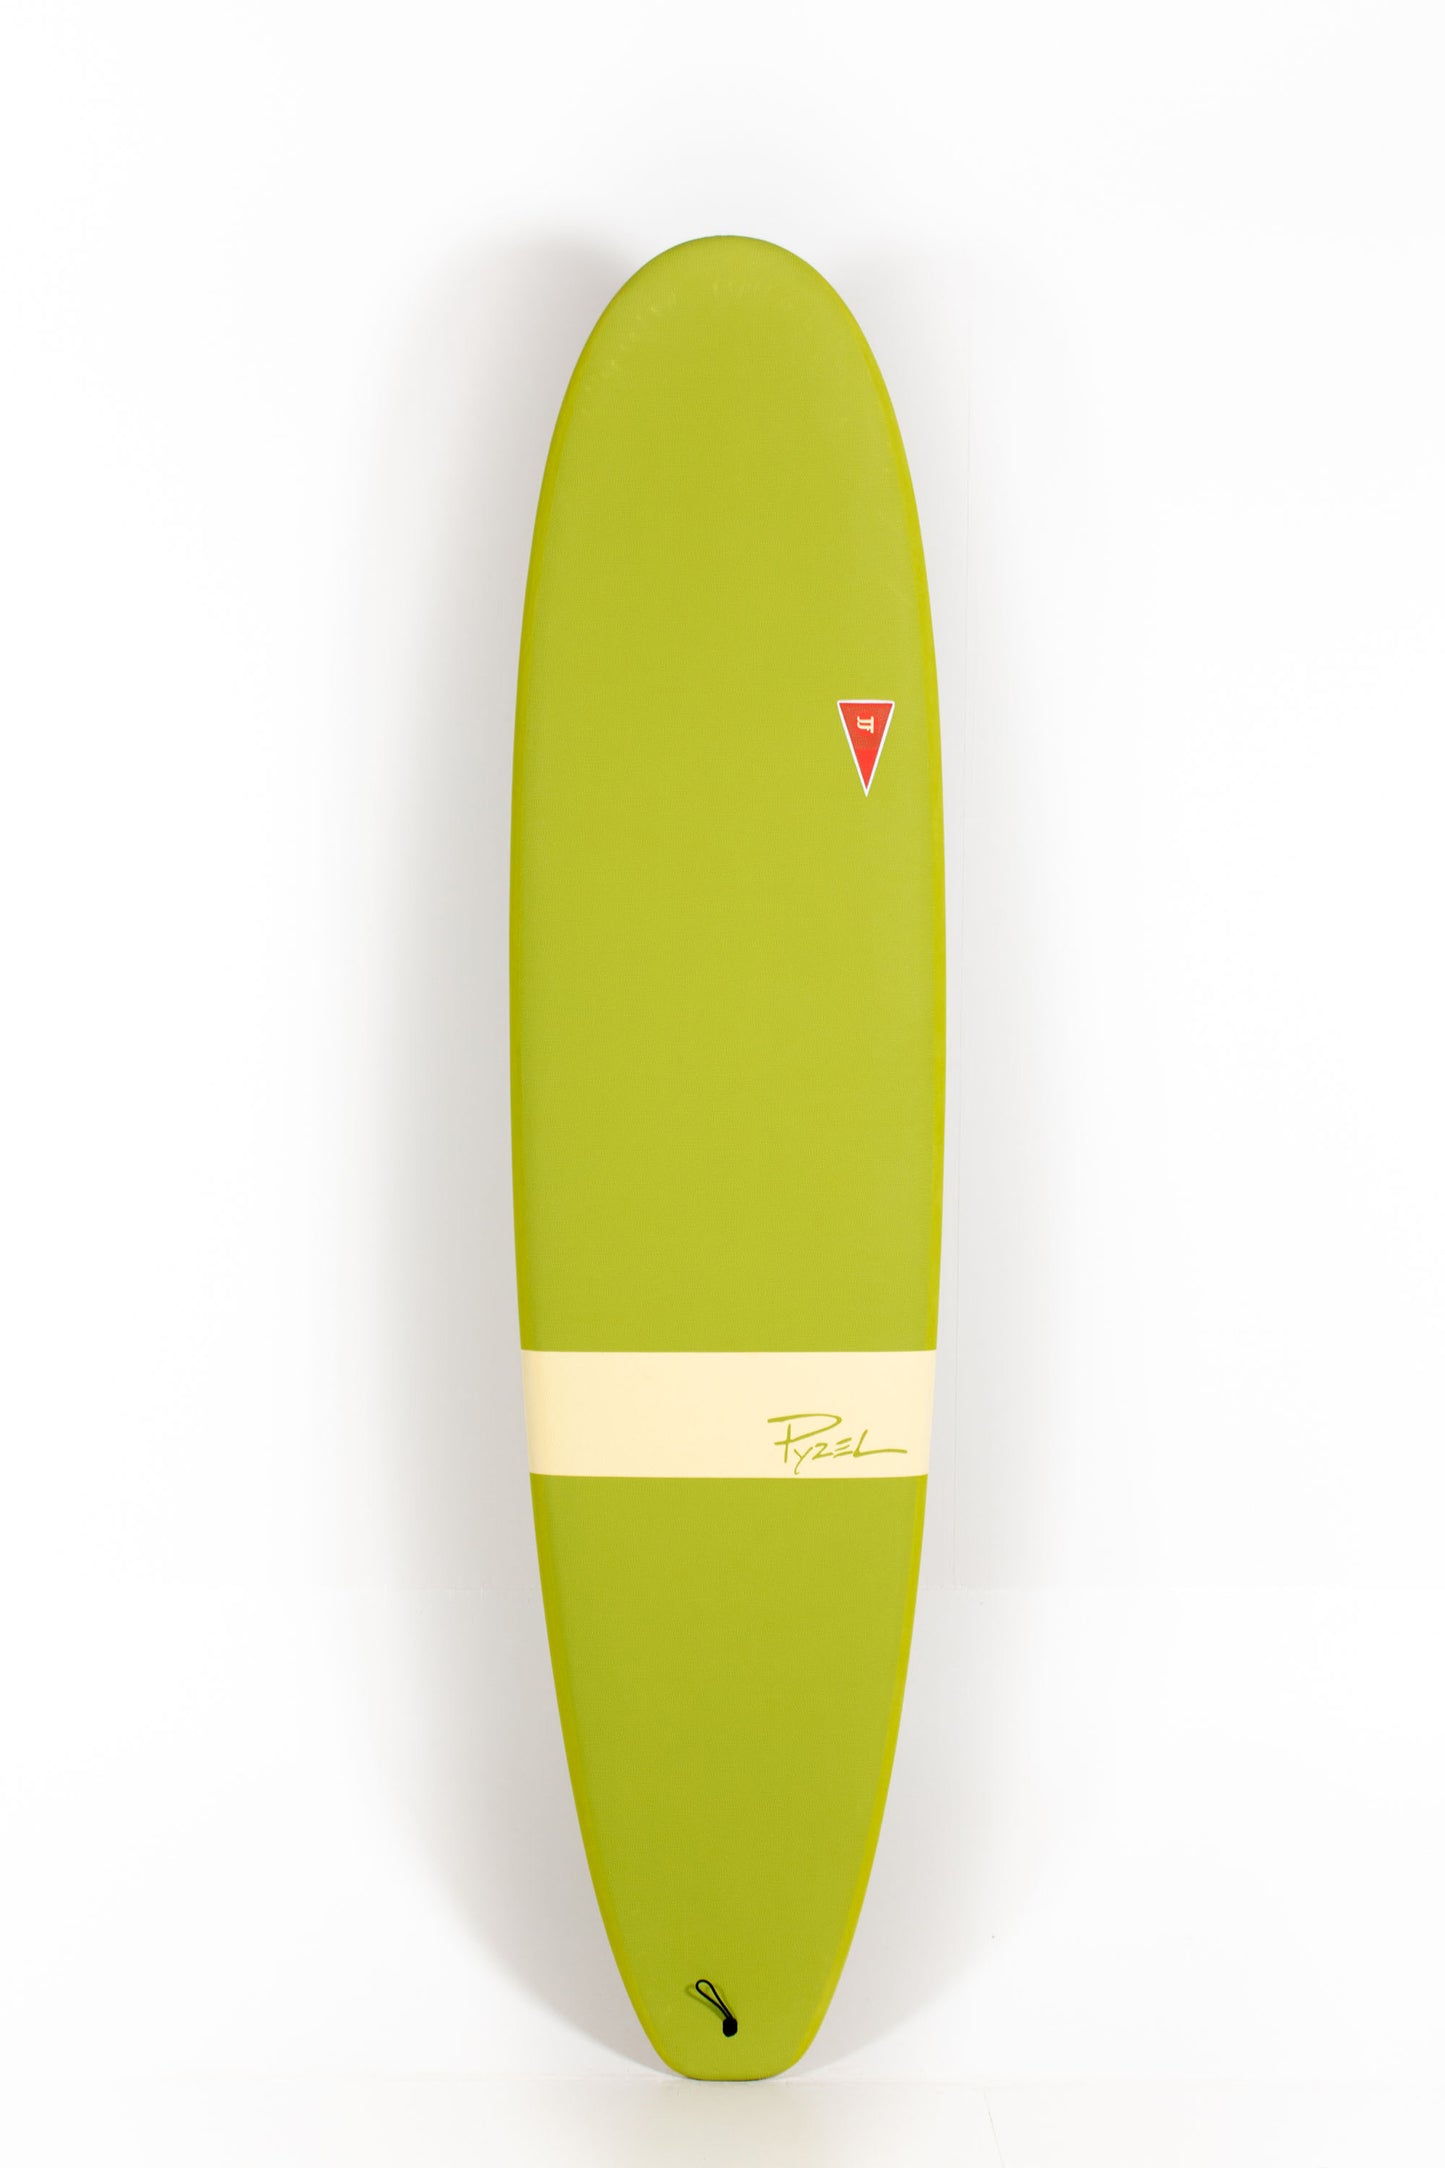 Pukas Surf Shop - JJF SURFBOARD - THE LOG 8.0 ARMY